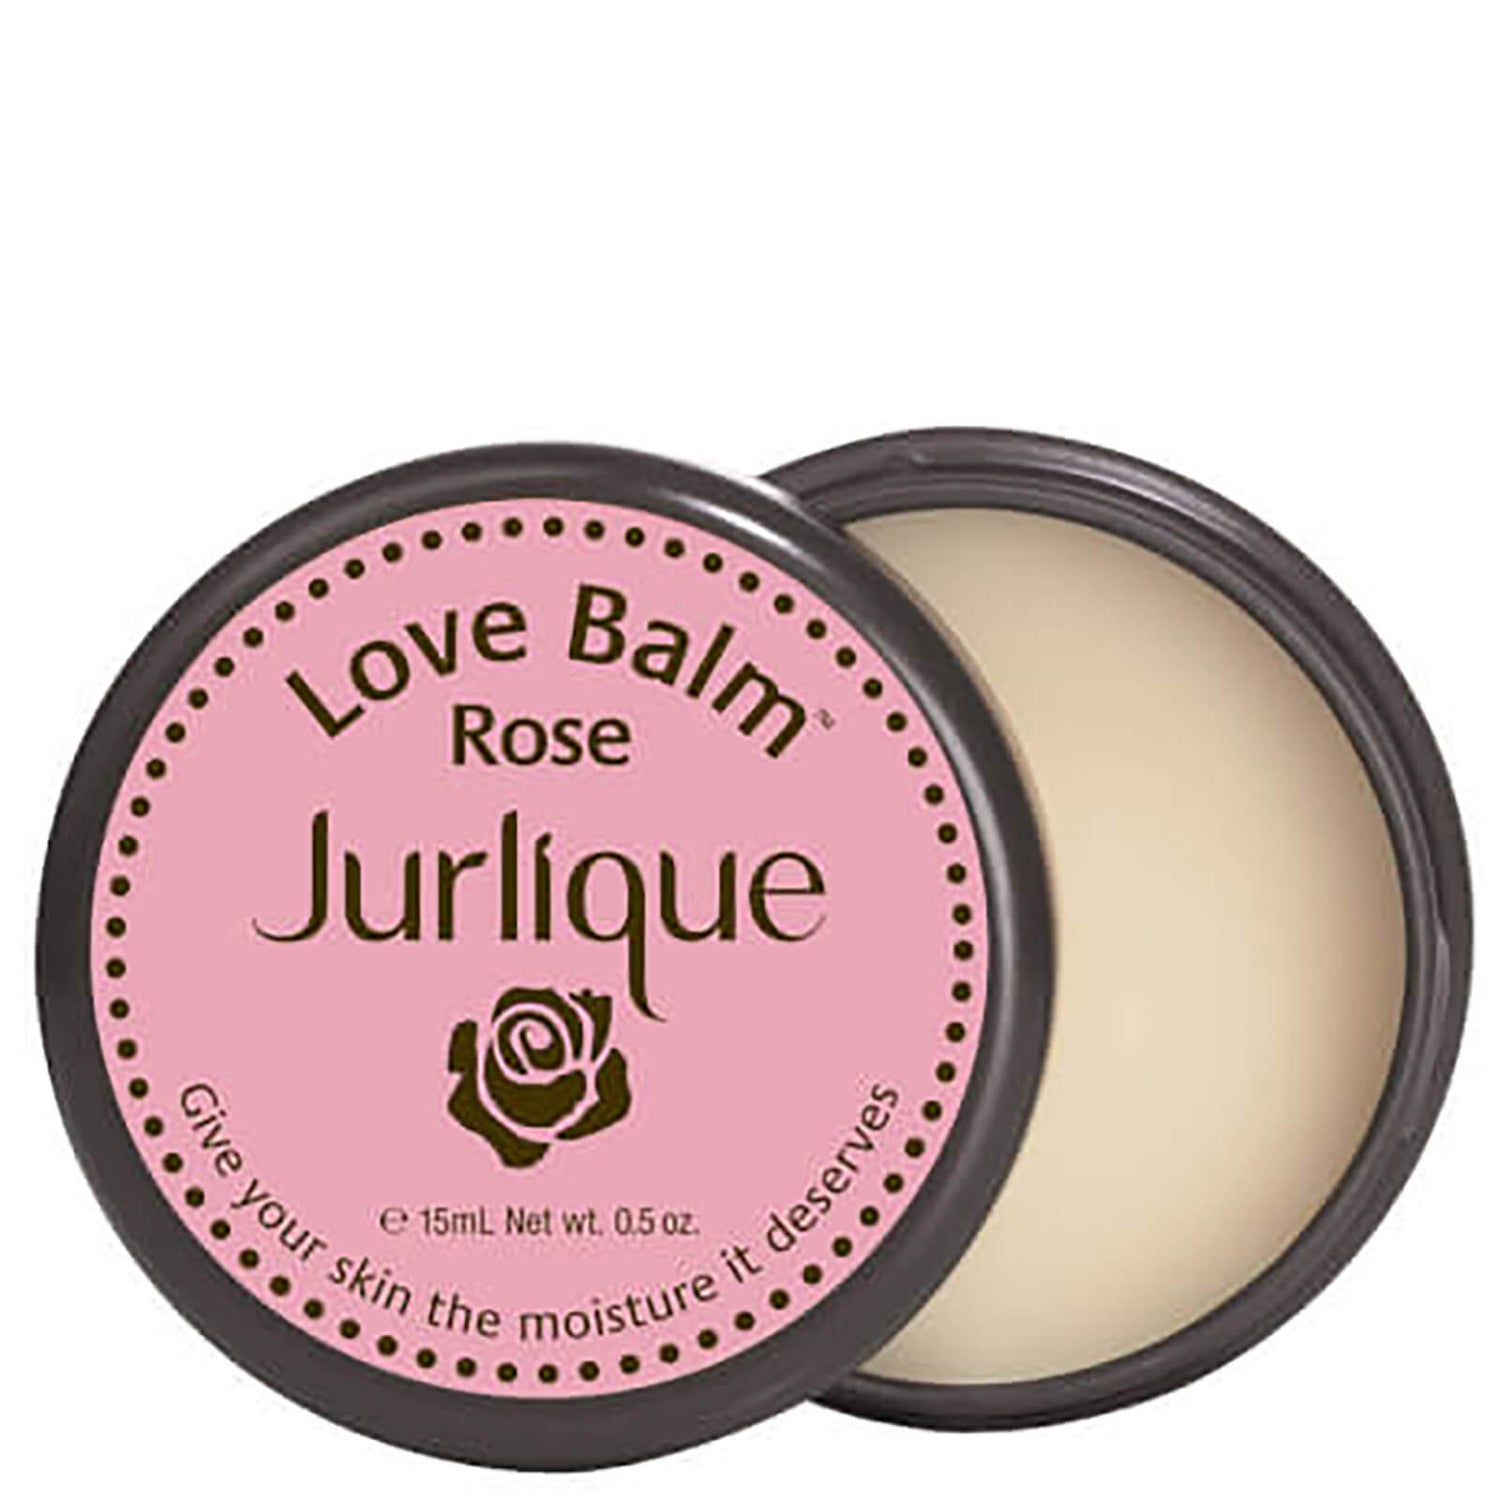 Jurlique Rose Love balsam (15 ml)